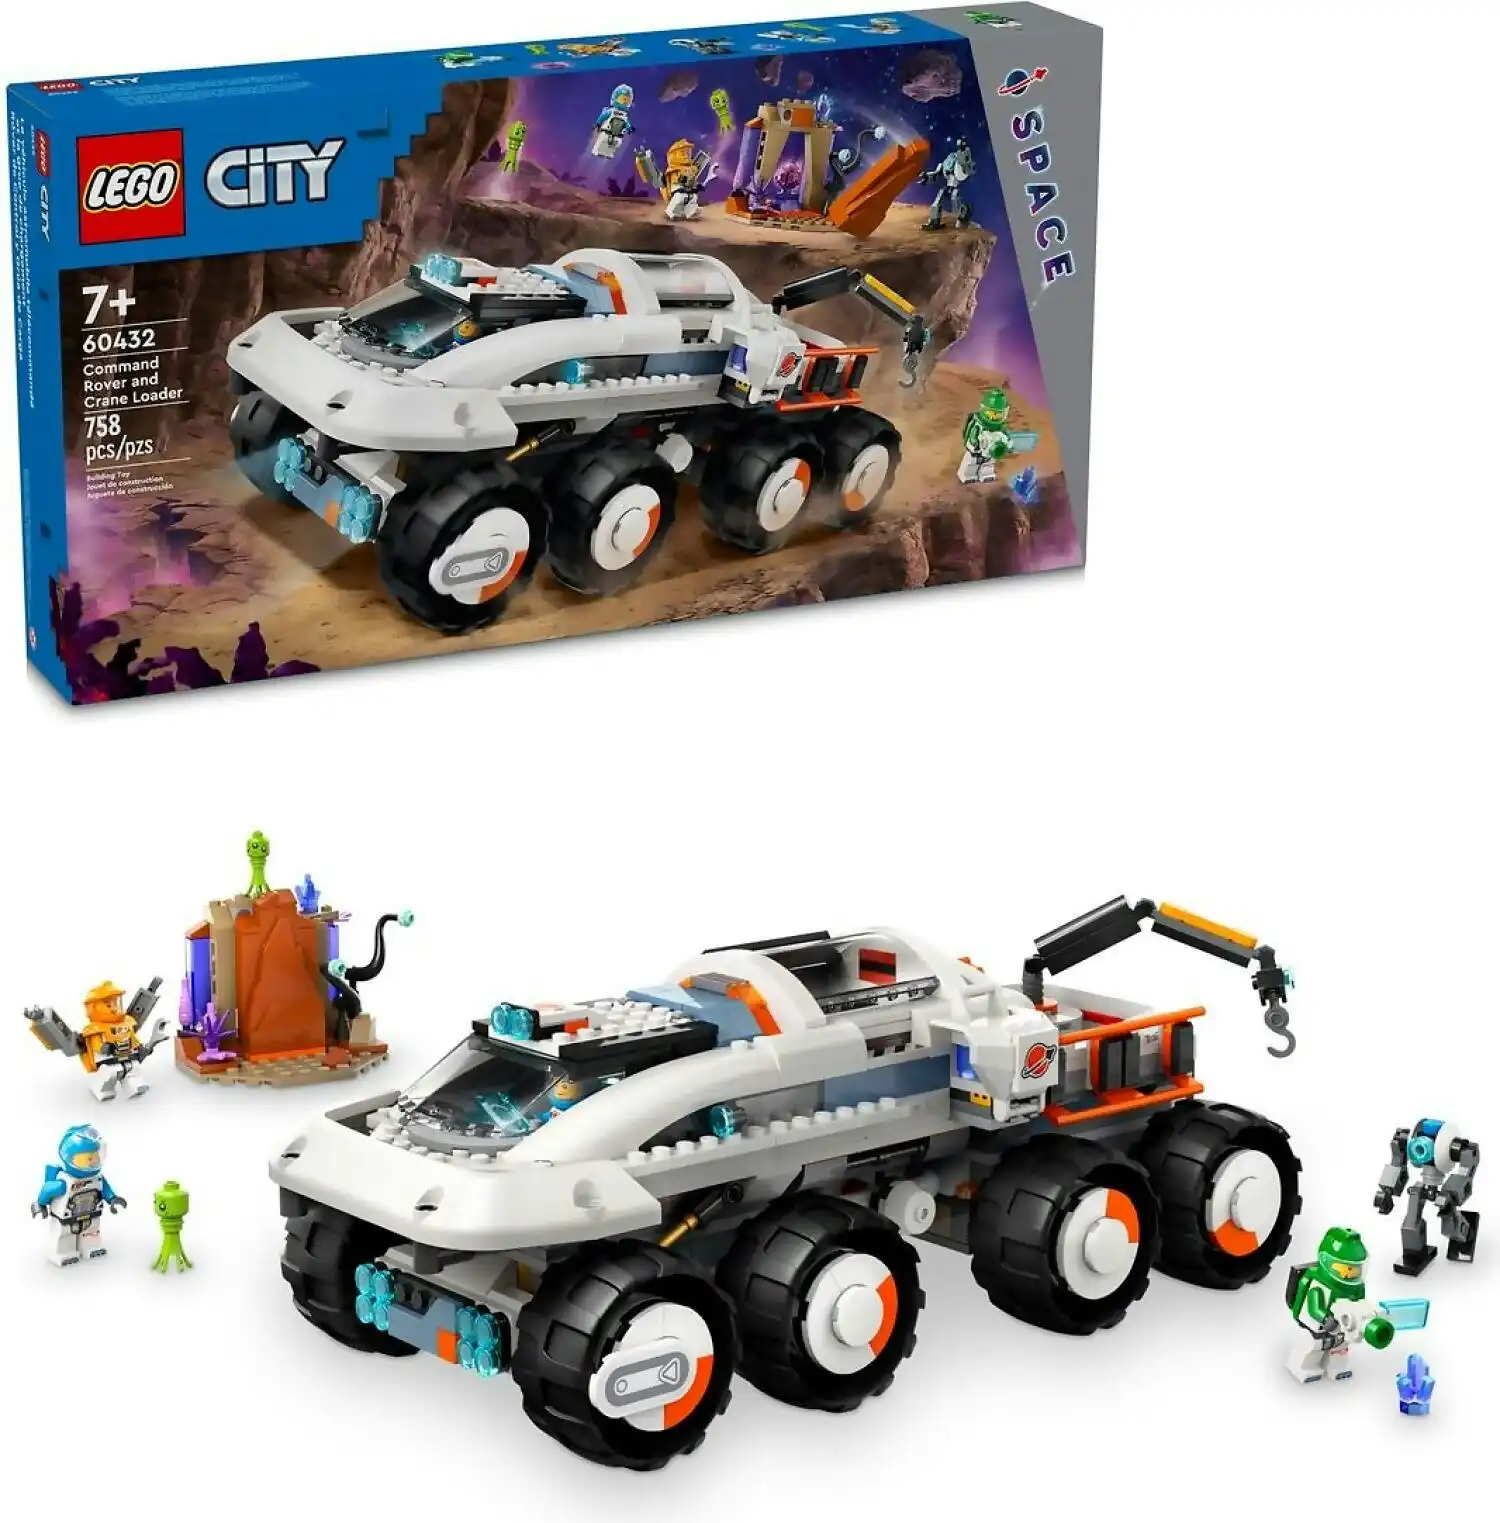 LEGO 60432 Command Rover and Crane Loader - City